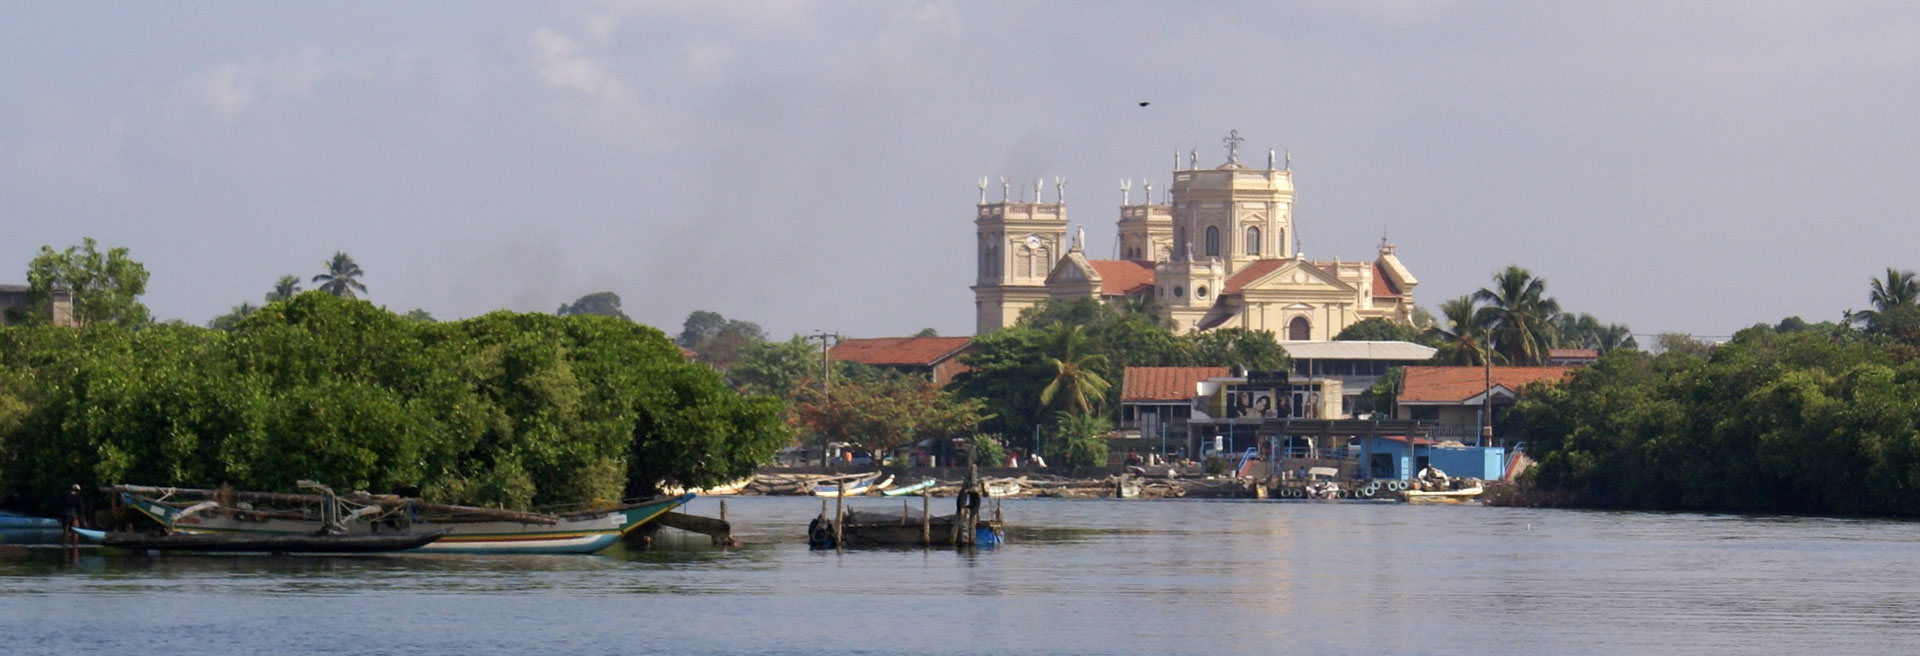 Colombo City Tour from Negombo, Negombo - Sri Lanka